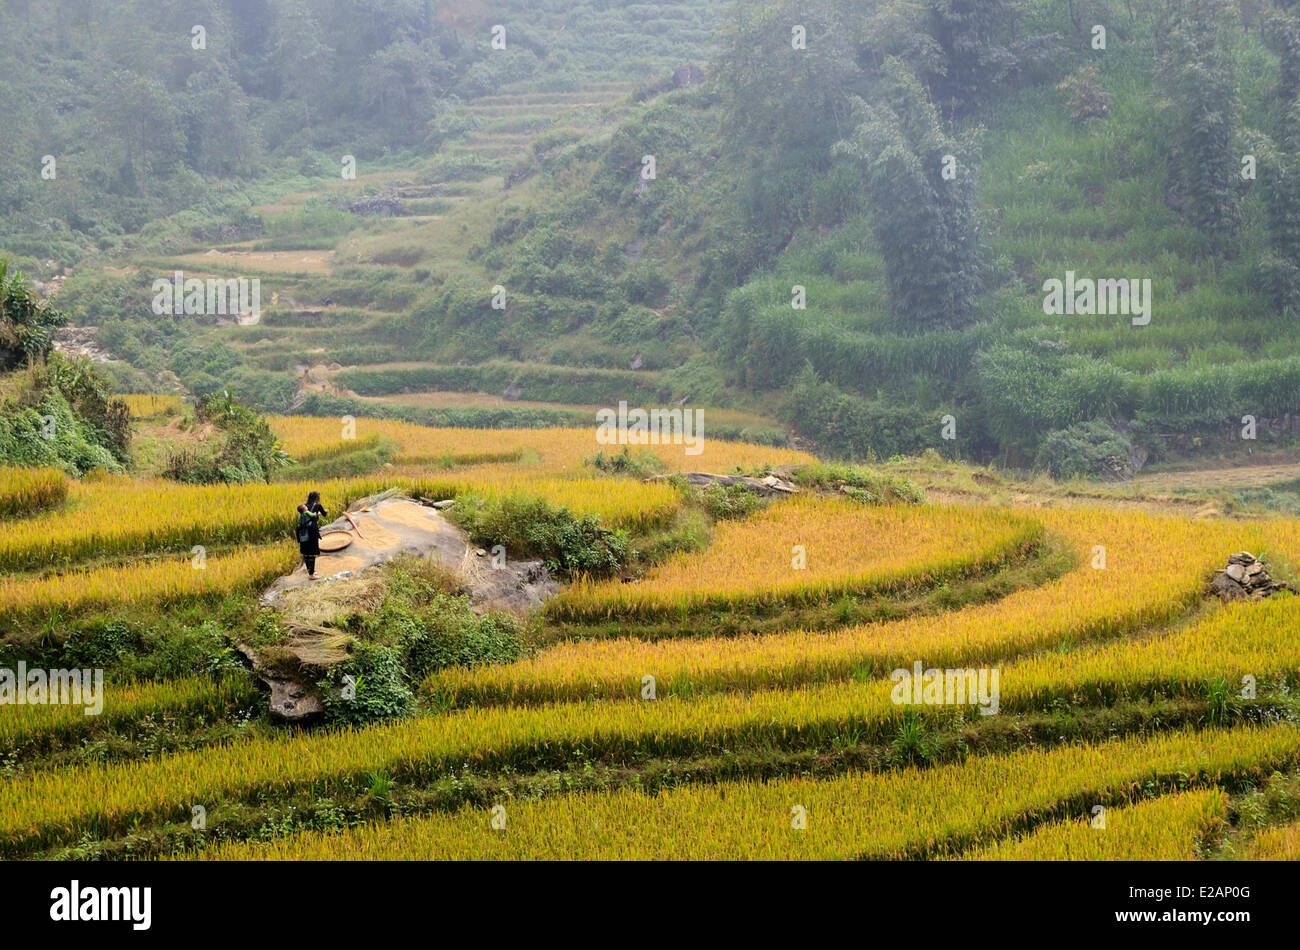 Vietnam, provincia de Lao Cai, Sapa , terraza, campos de arroz, la etnia Hmong negro gente cosechando arroz Foto de stock